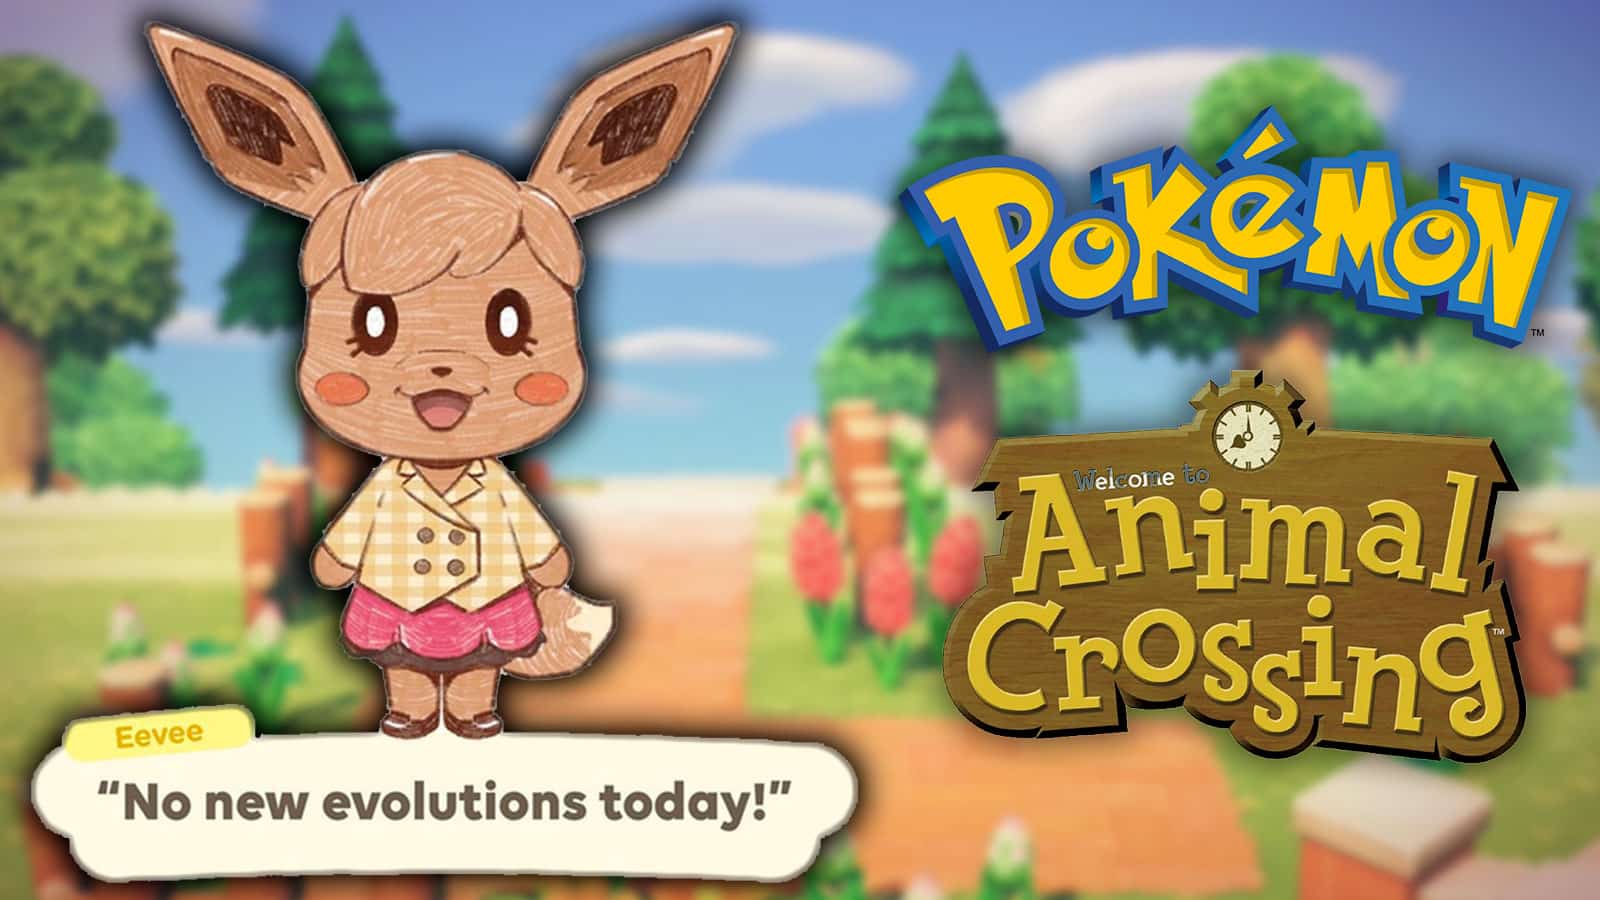 Un fan imagien un crossover Pokémon x Animal Crossing